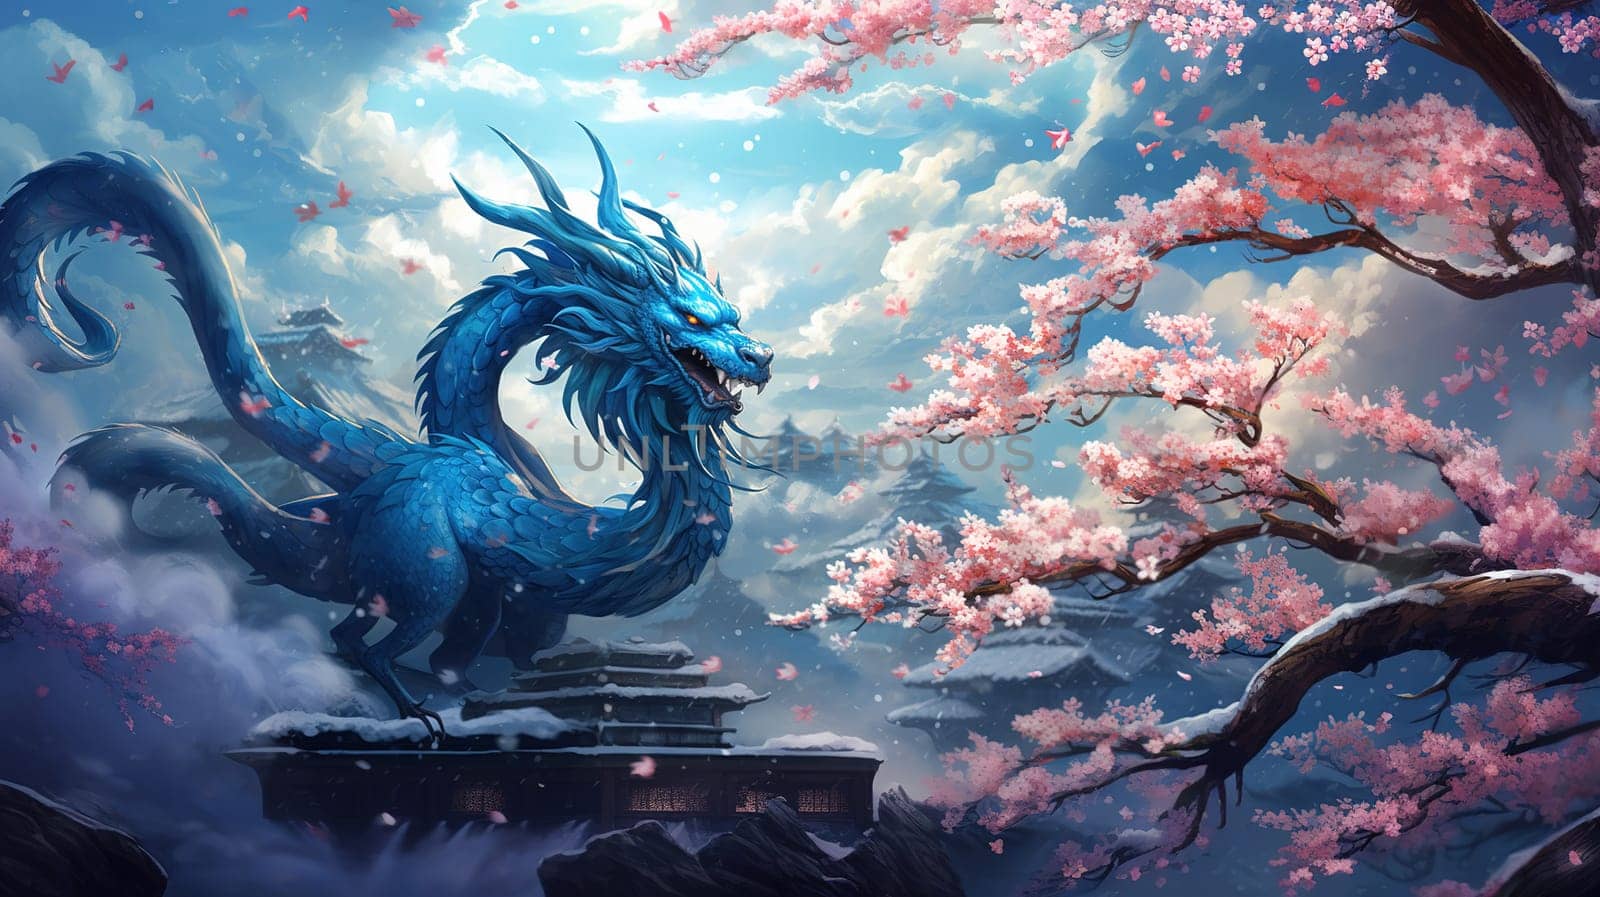 Illustration of a large blue dragon soaring over the city, Chinese lunar calendar, festival of awakening the dragon bringing rain, Zhonghe Blue Dragon Festival. High quality illustration